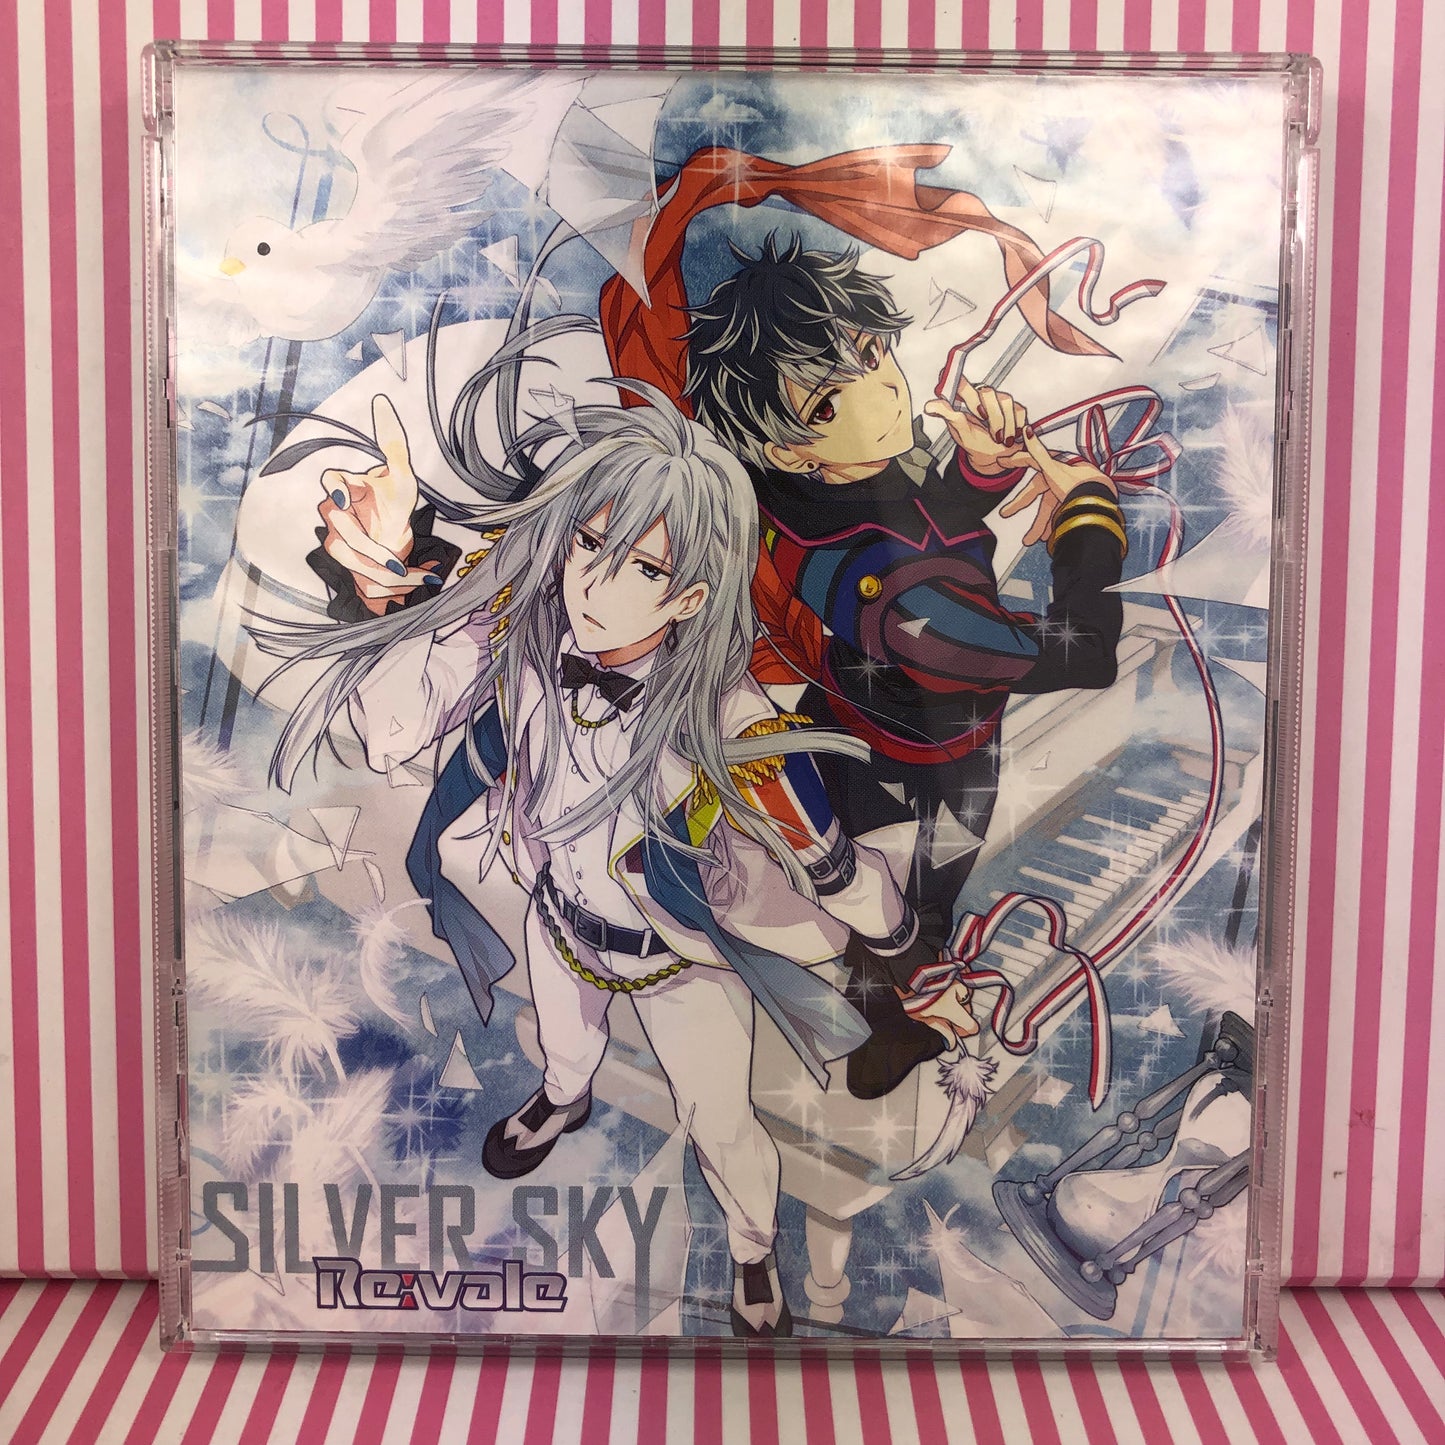 Idolish7 Re:Vale - Silver Sky Single CD